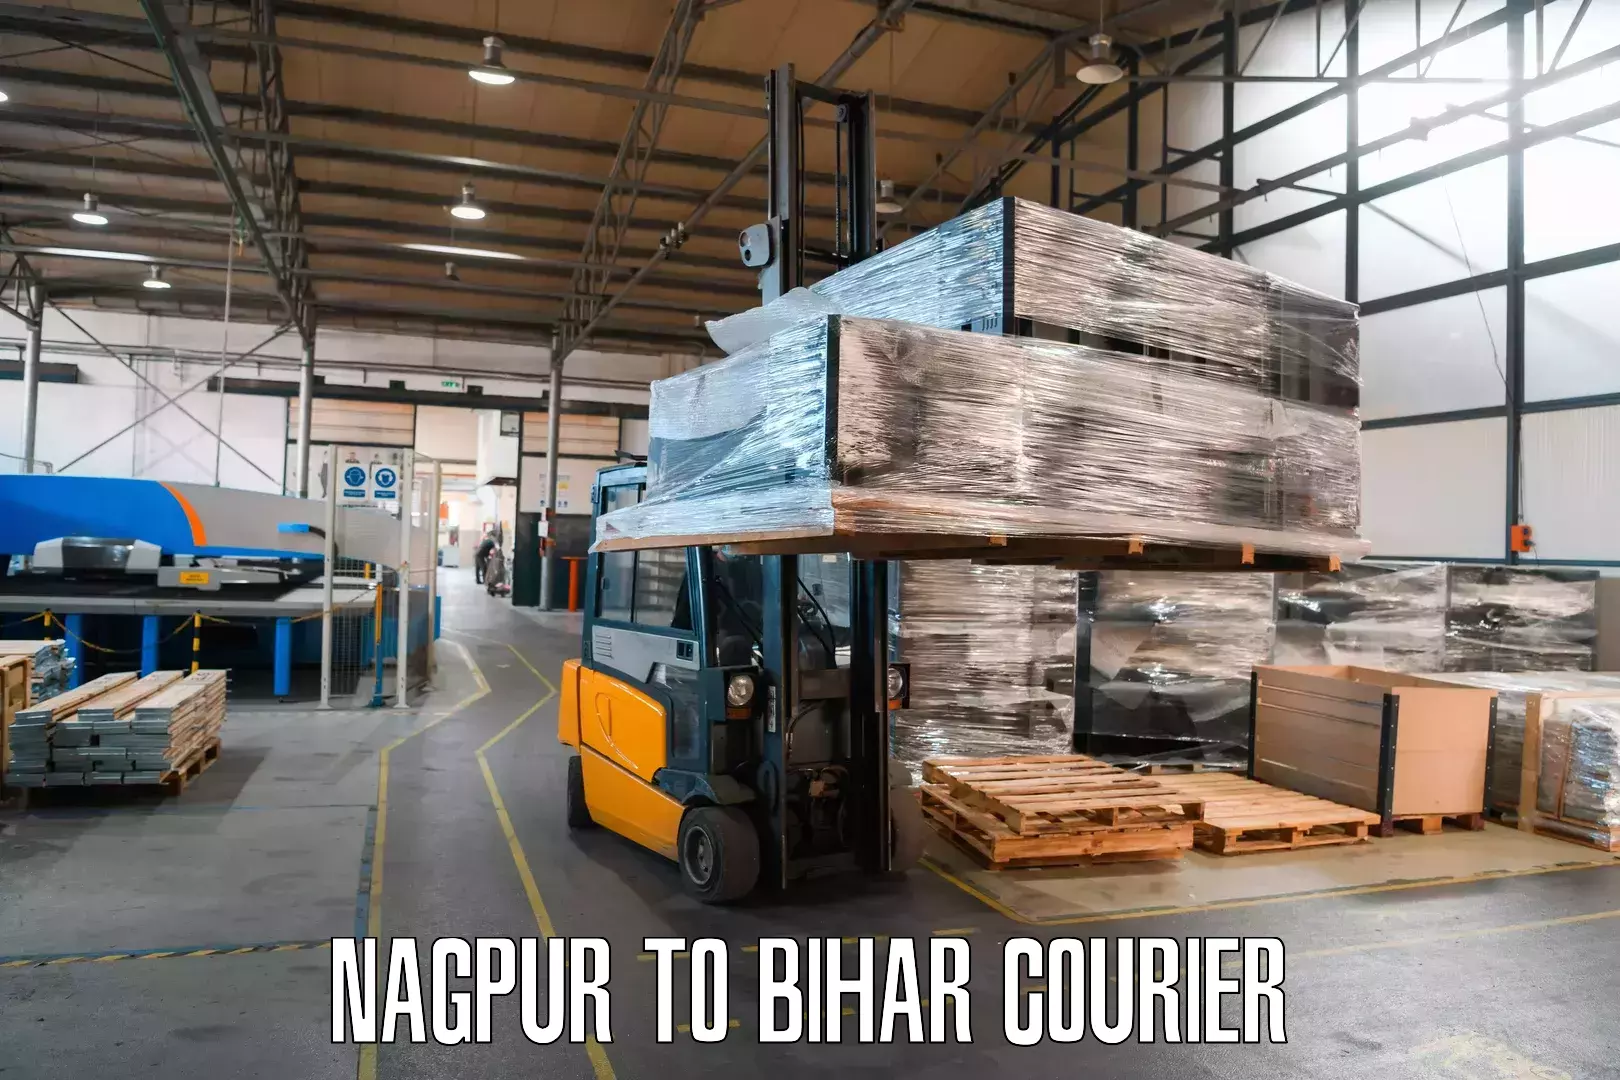 Courier service partnerships Nagpur to Bihar